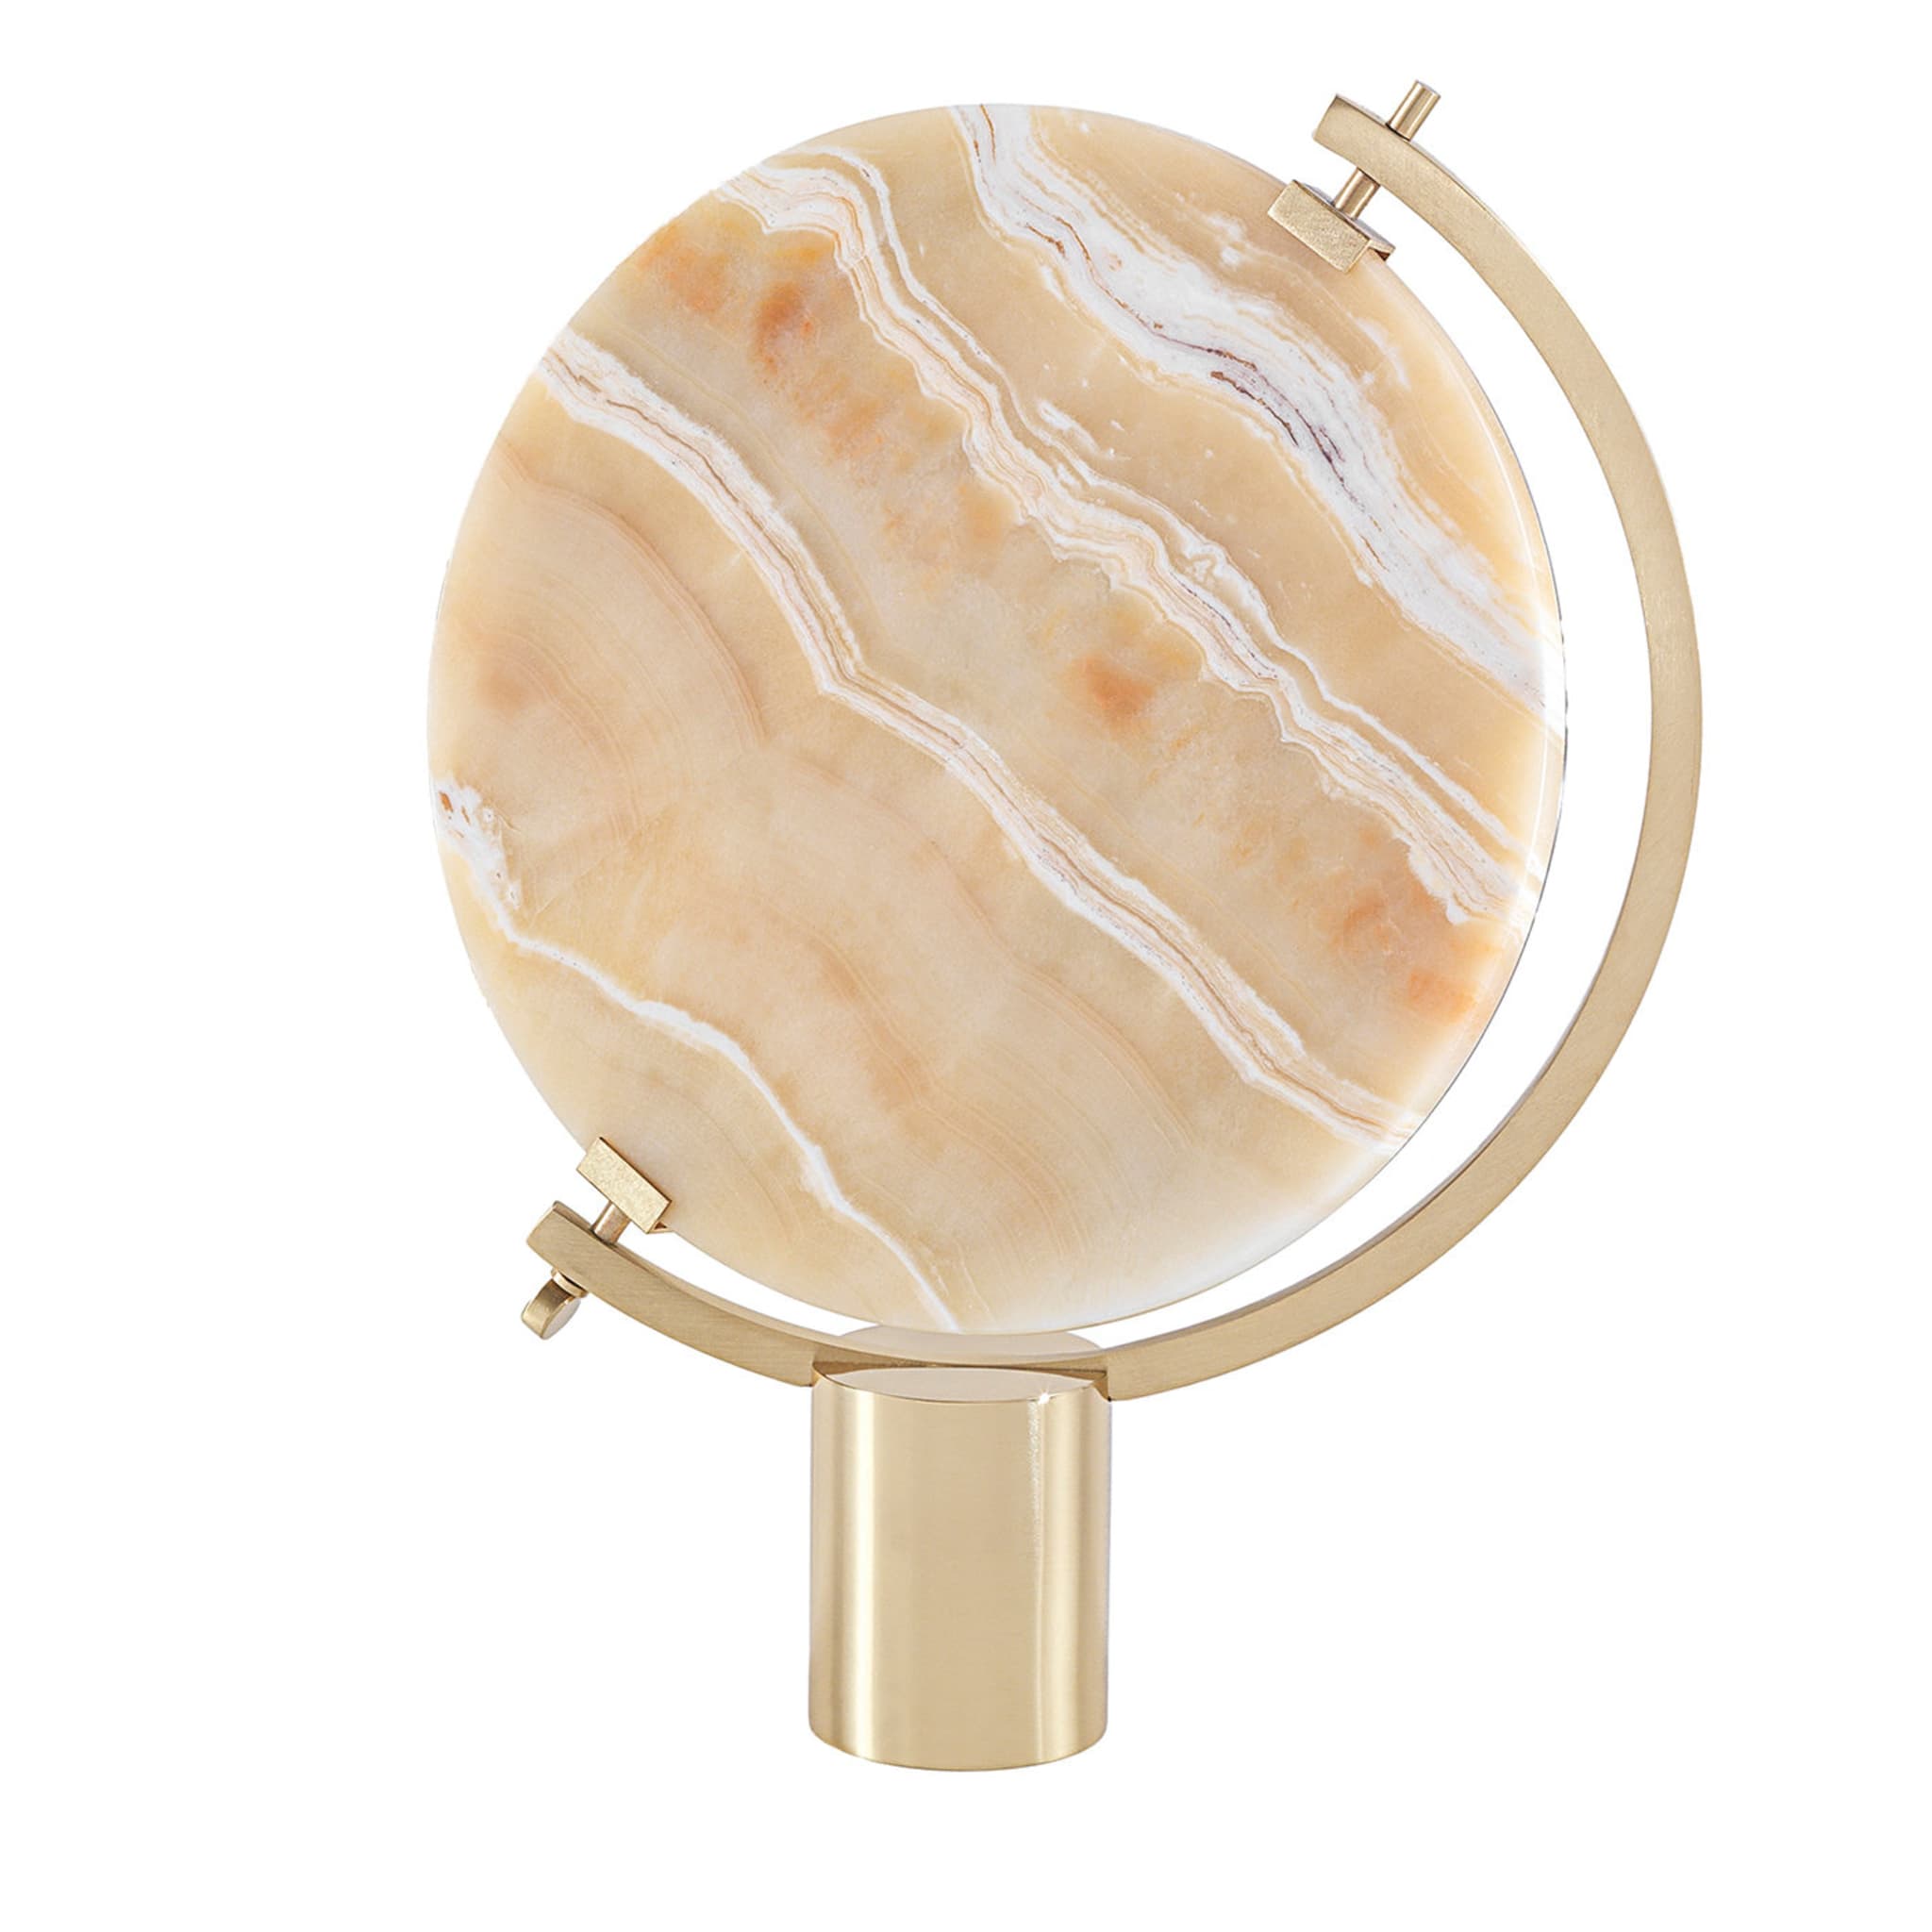 Naia Tabletop Mirror in Honey Onyx Marble by CTRLZAK - Main view